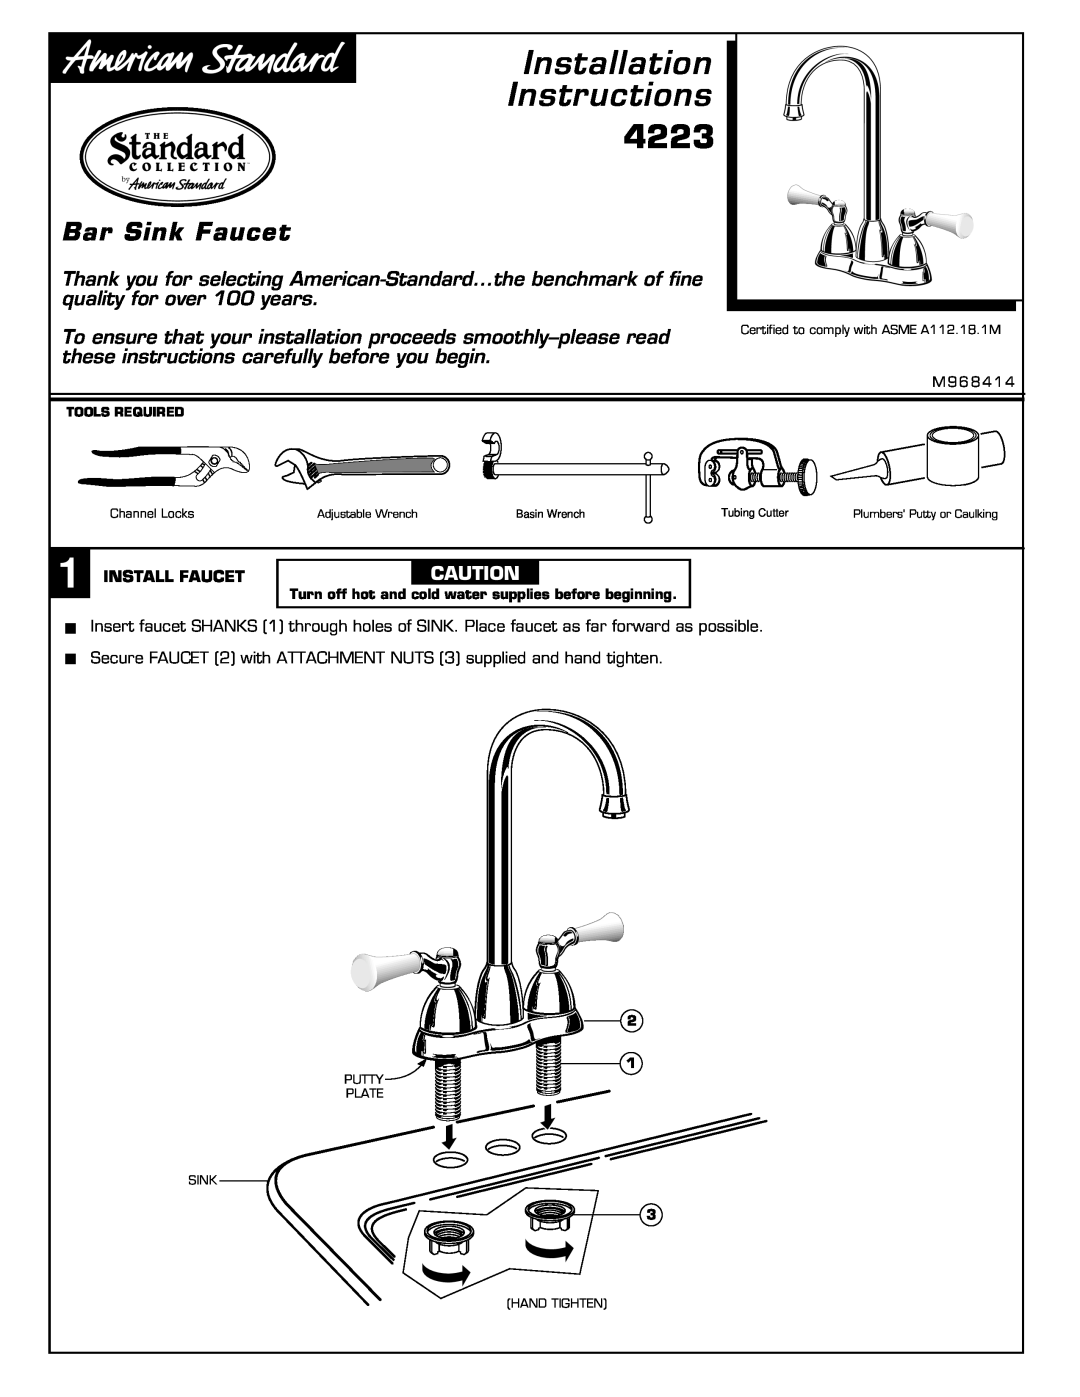 American Standard 4223 installation instructions Bar Sink Faucet, Installation Instructions 